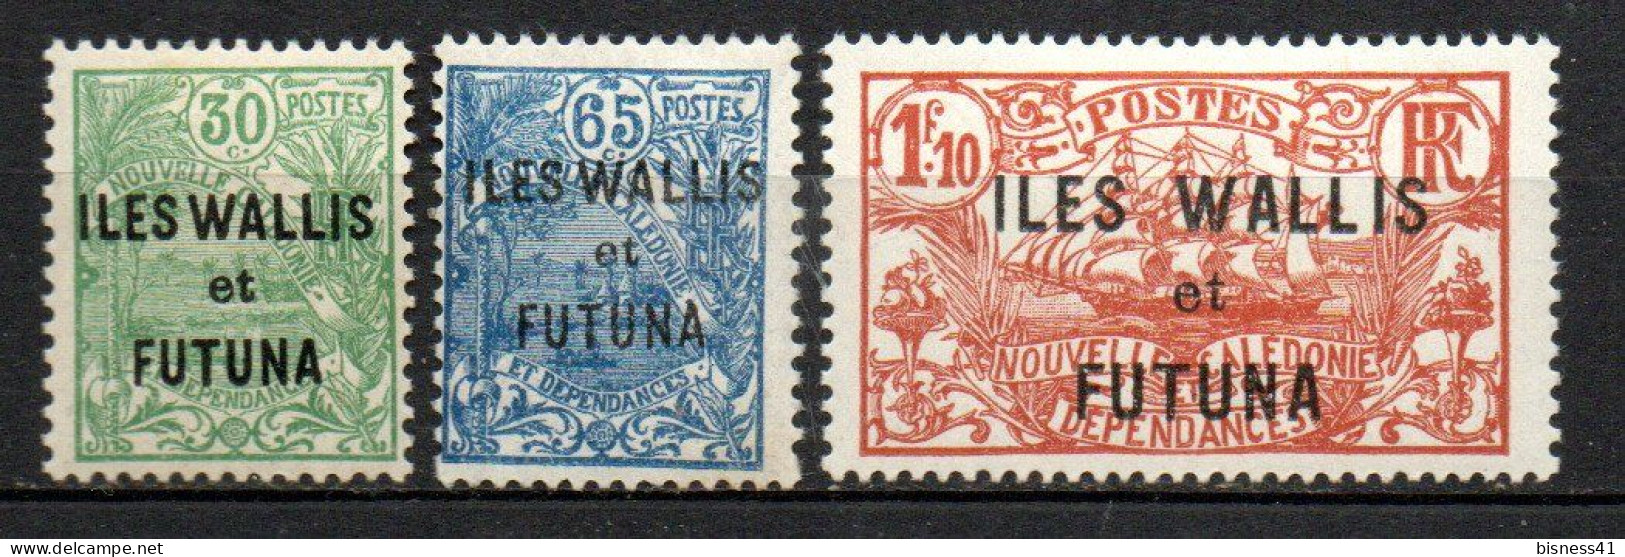 Col33 Colonie Wallis & Futuna N° 40 à 42 Neuf X MH Cote : 17,00€ - Nuovi